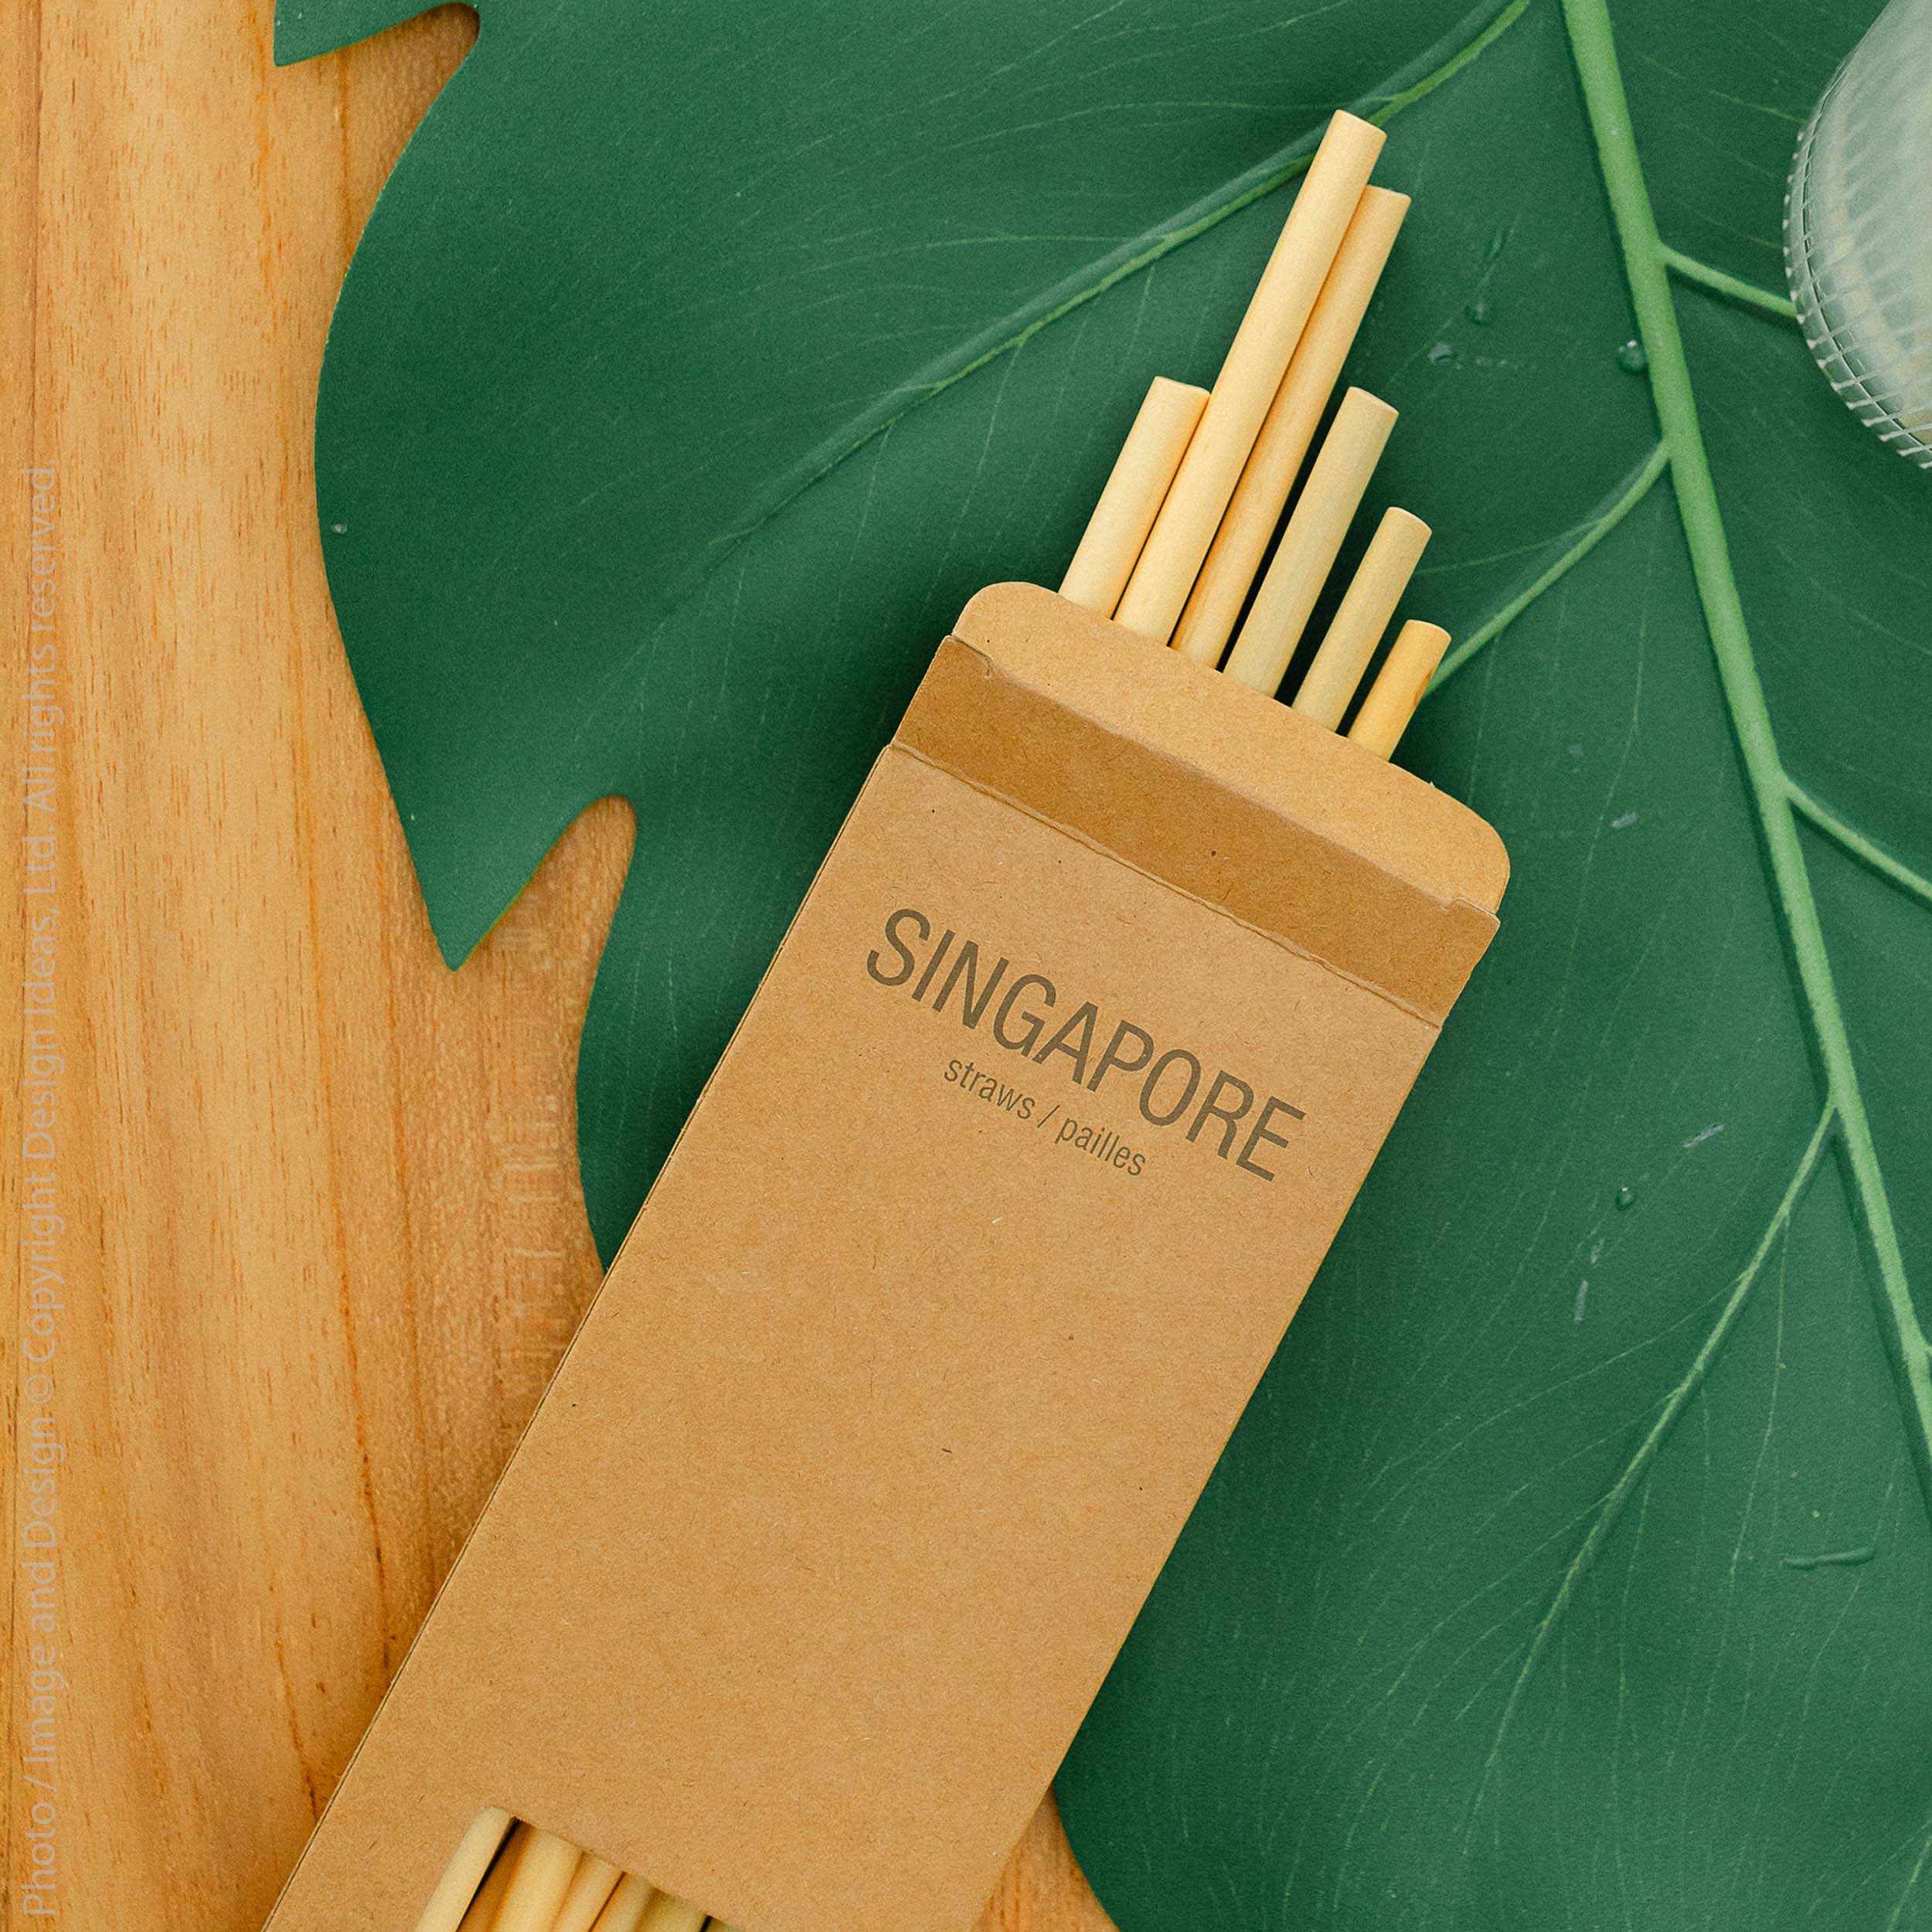 Singapore Straws, Box of 20